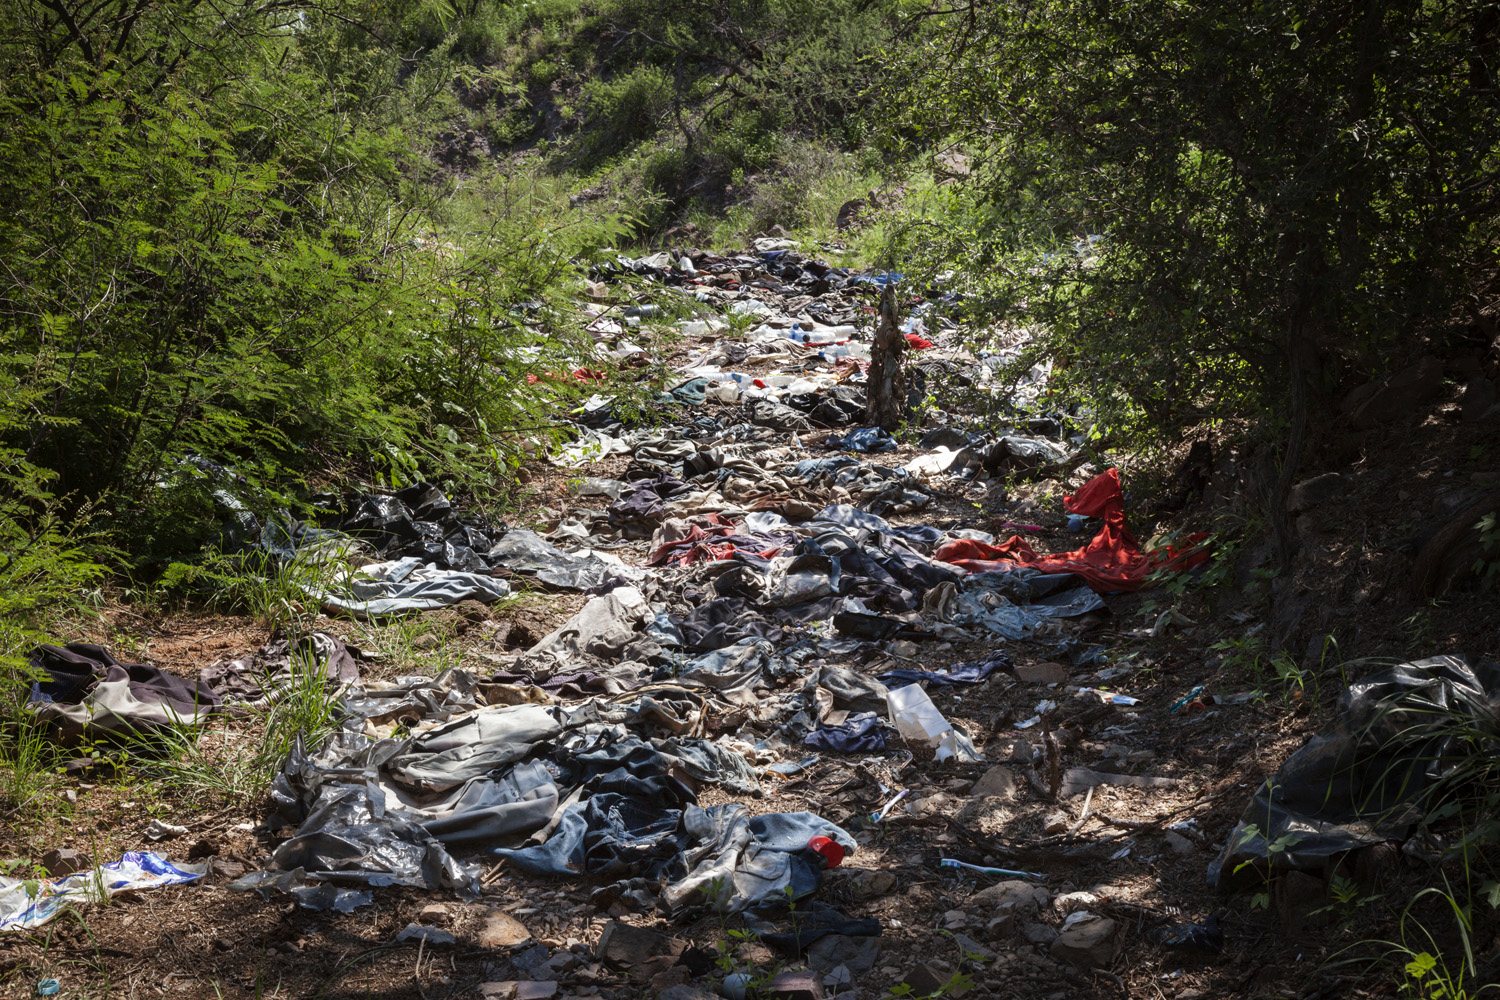  Debris Field Left By Migrants on U.S. Side of the Border, 2012 